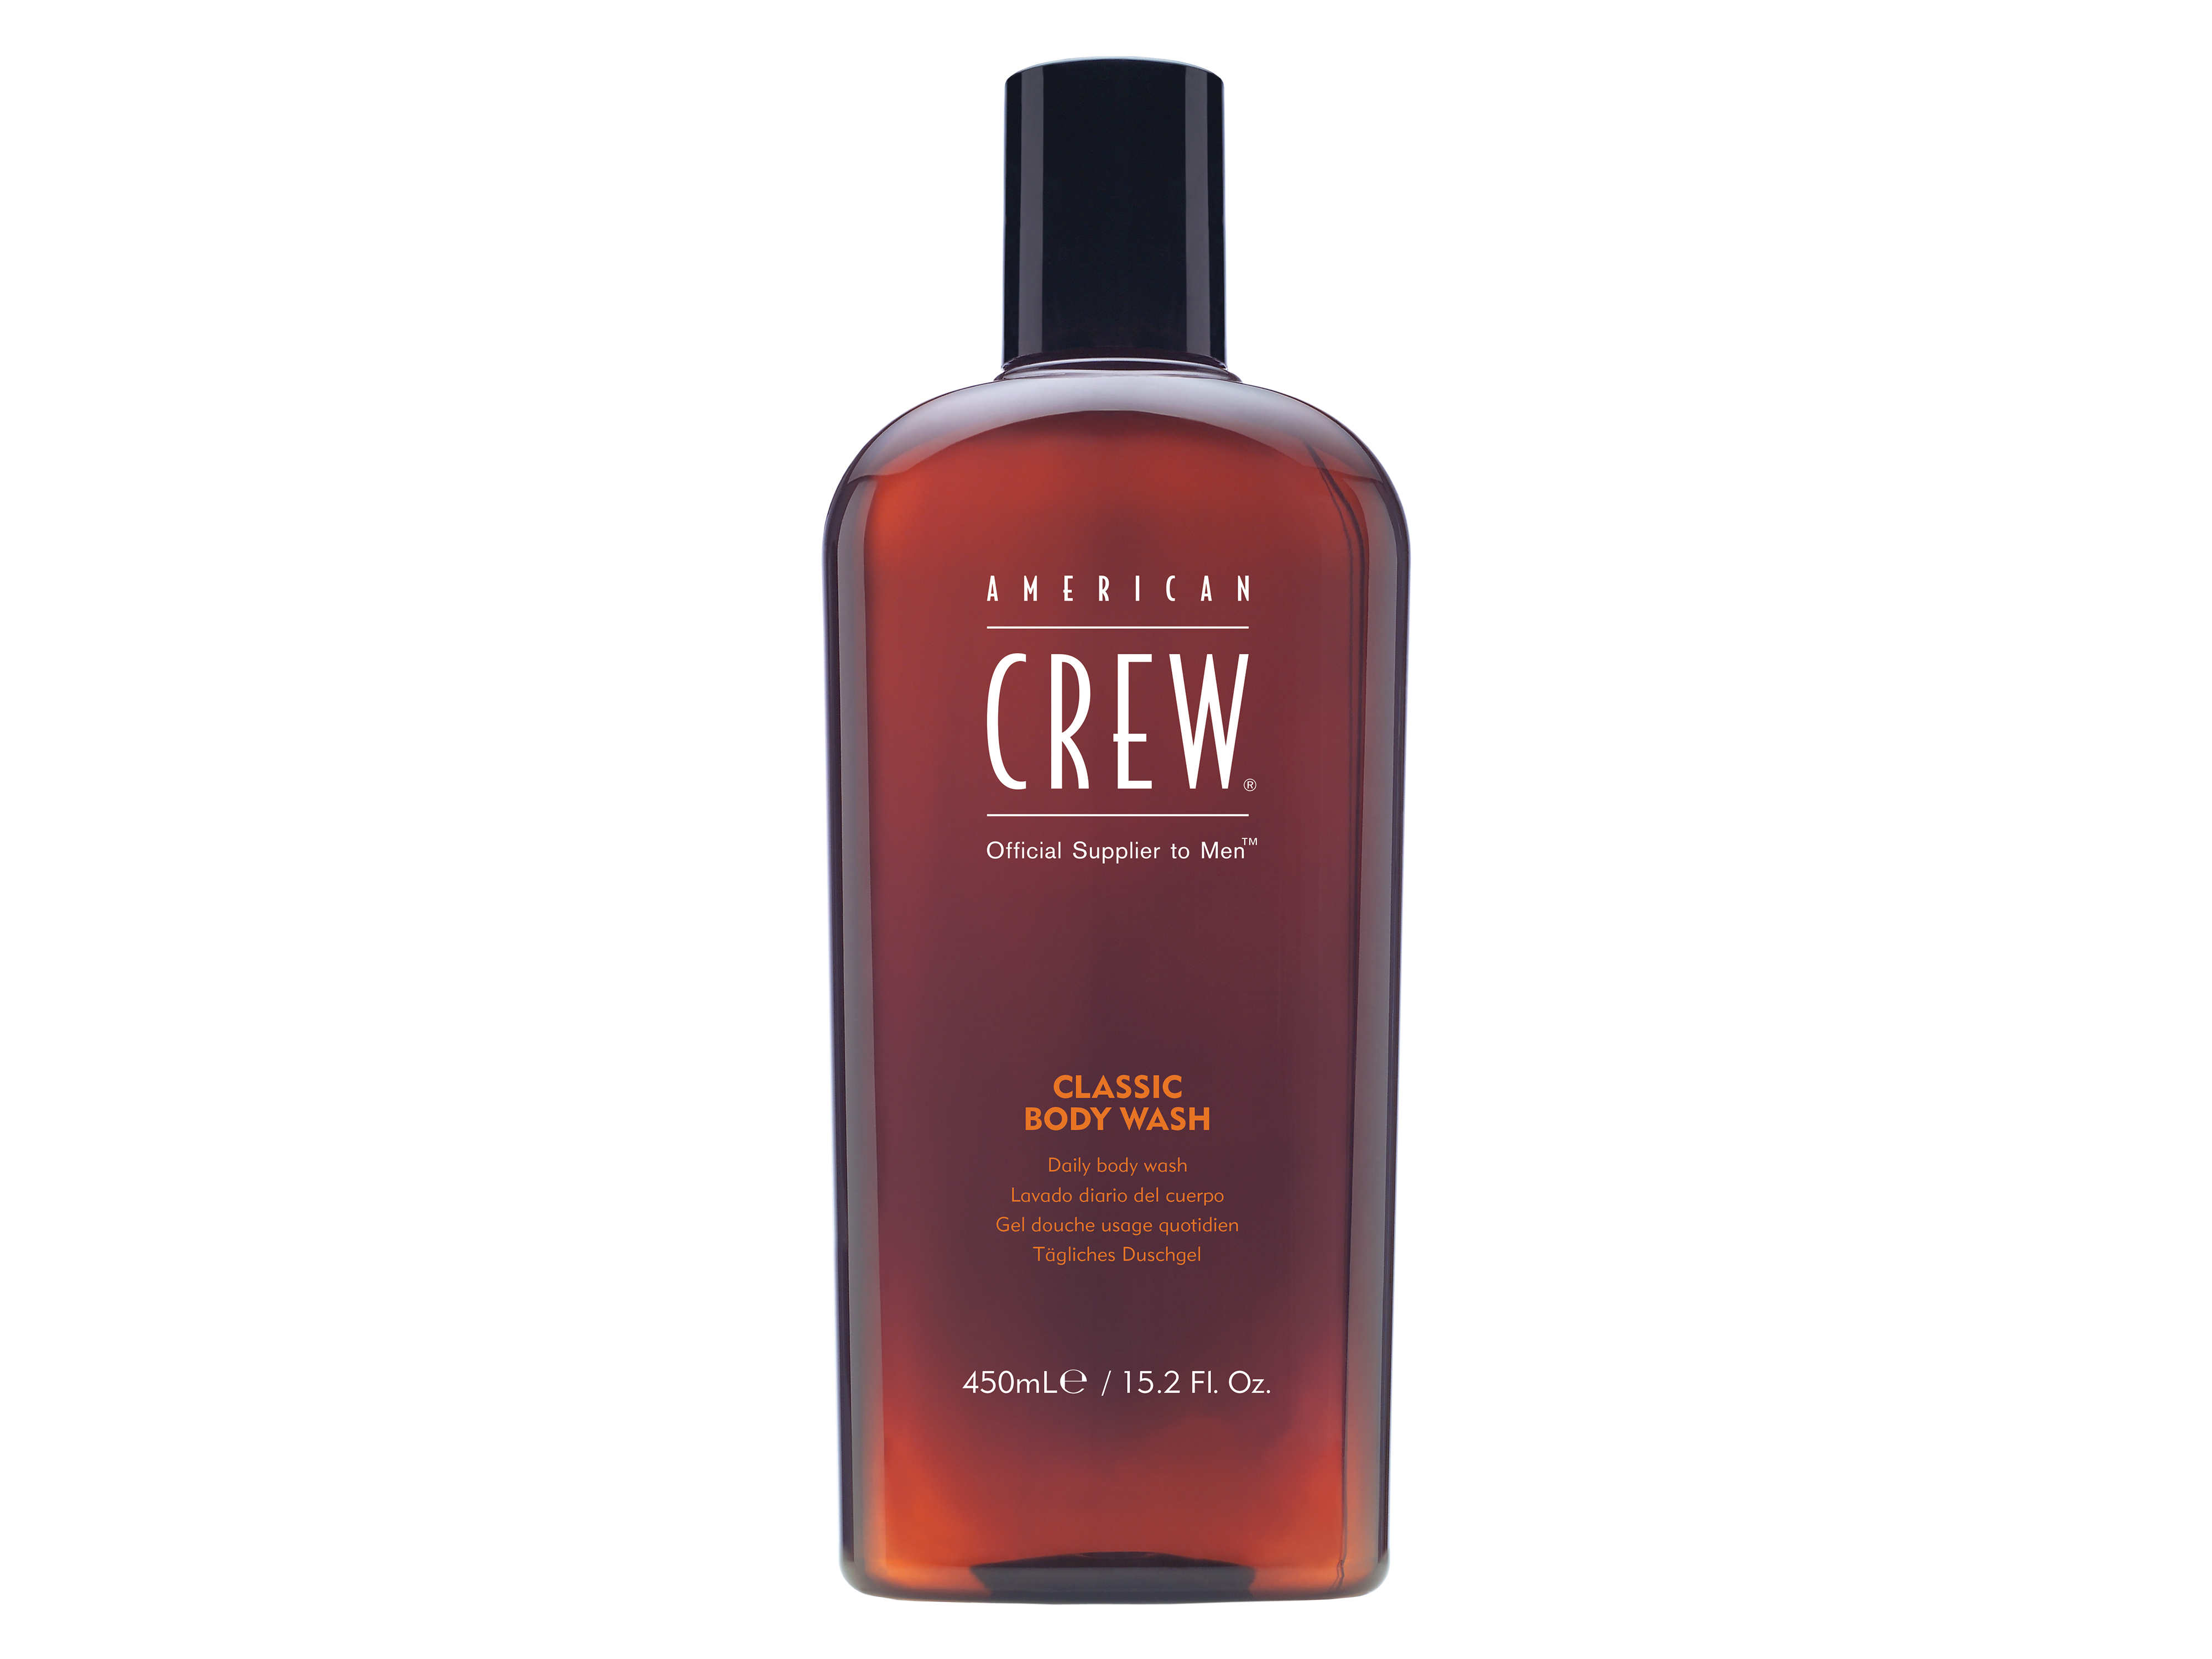 American Crew AmericanCrew Classic Body Wash, 450